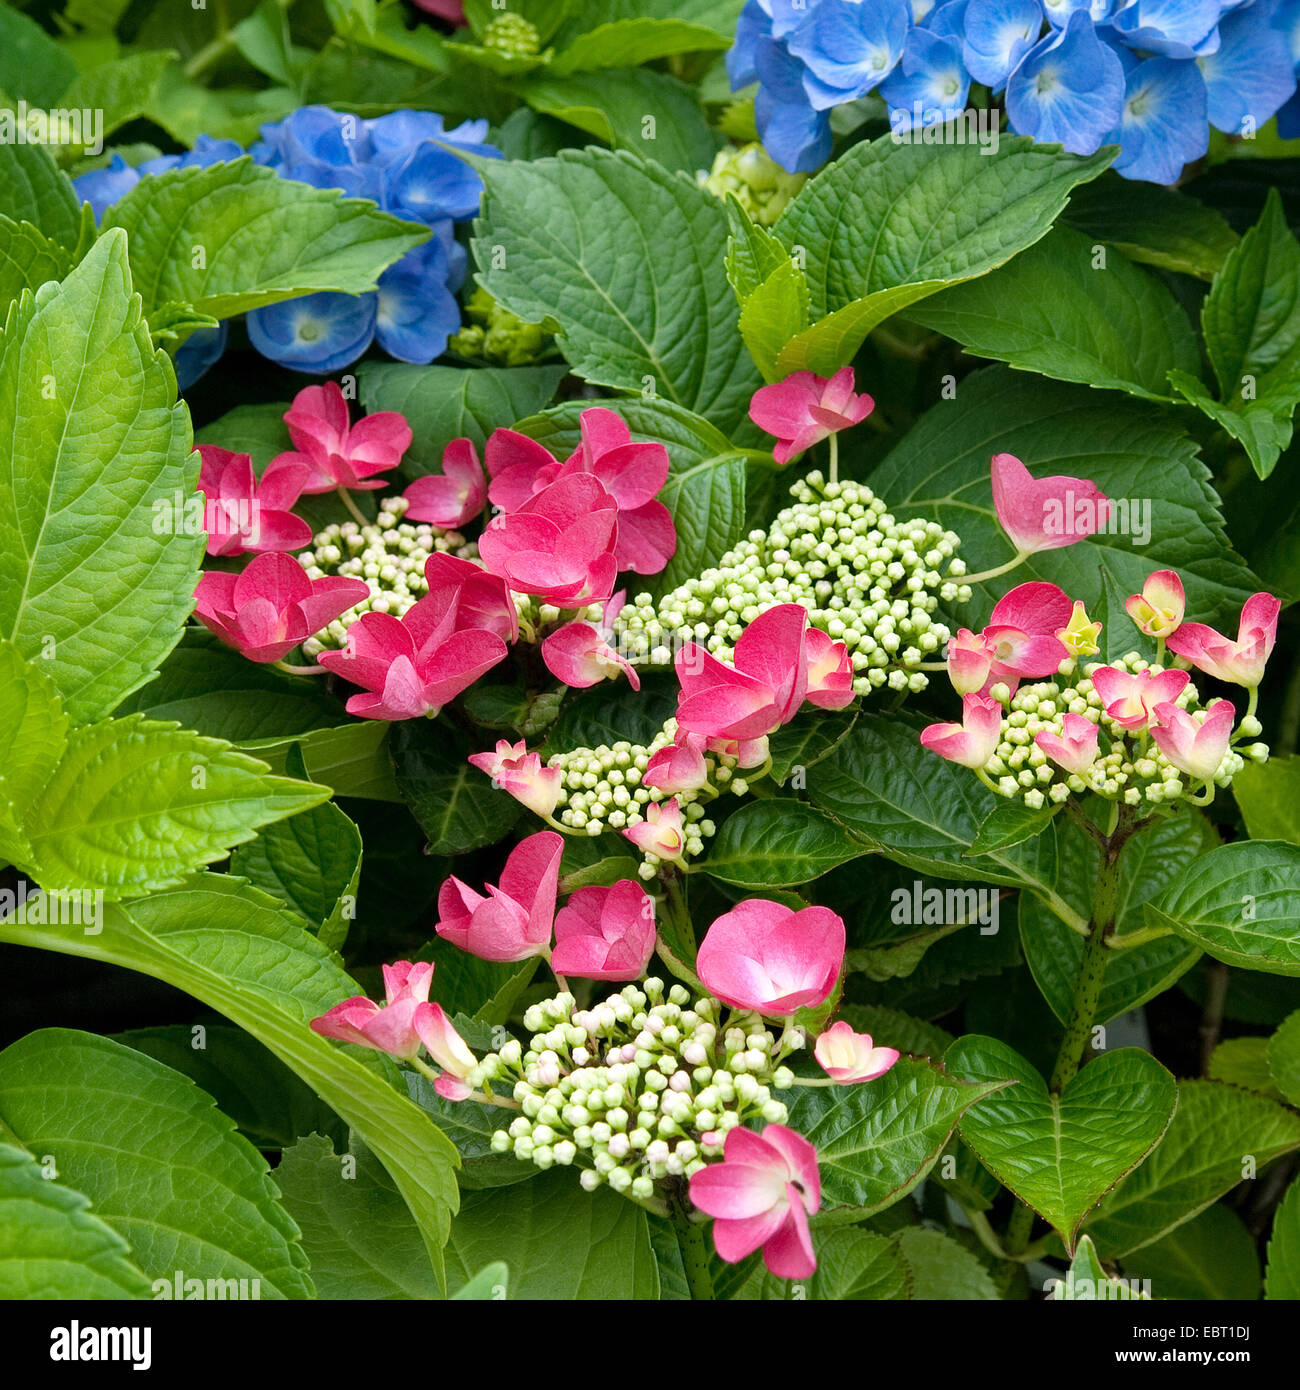 Hortensia jardin dentelle, cap hortensia (Hydrangea macrophylla 'Lady In Red', Hydrangea macrophylla dame en rouge), le cultivar dame en rouge Banque D'Images